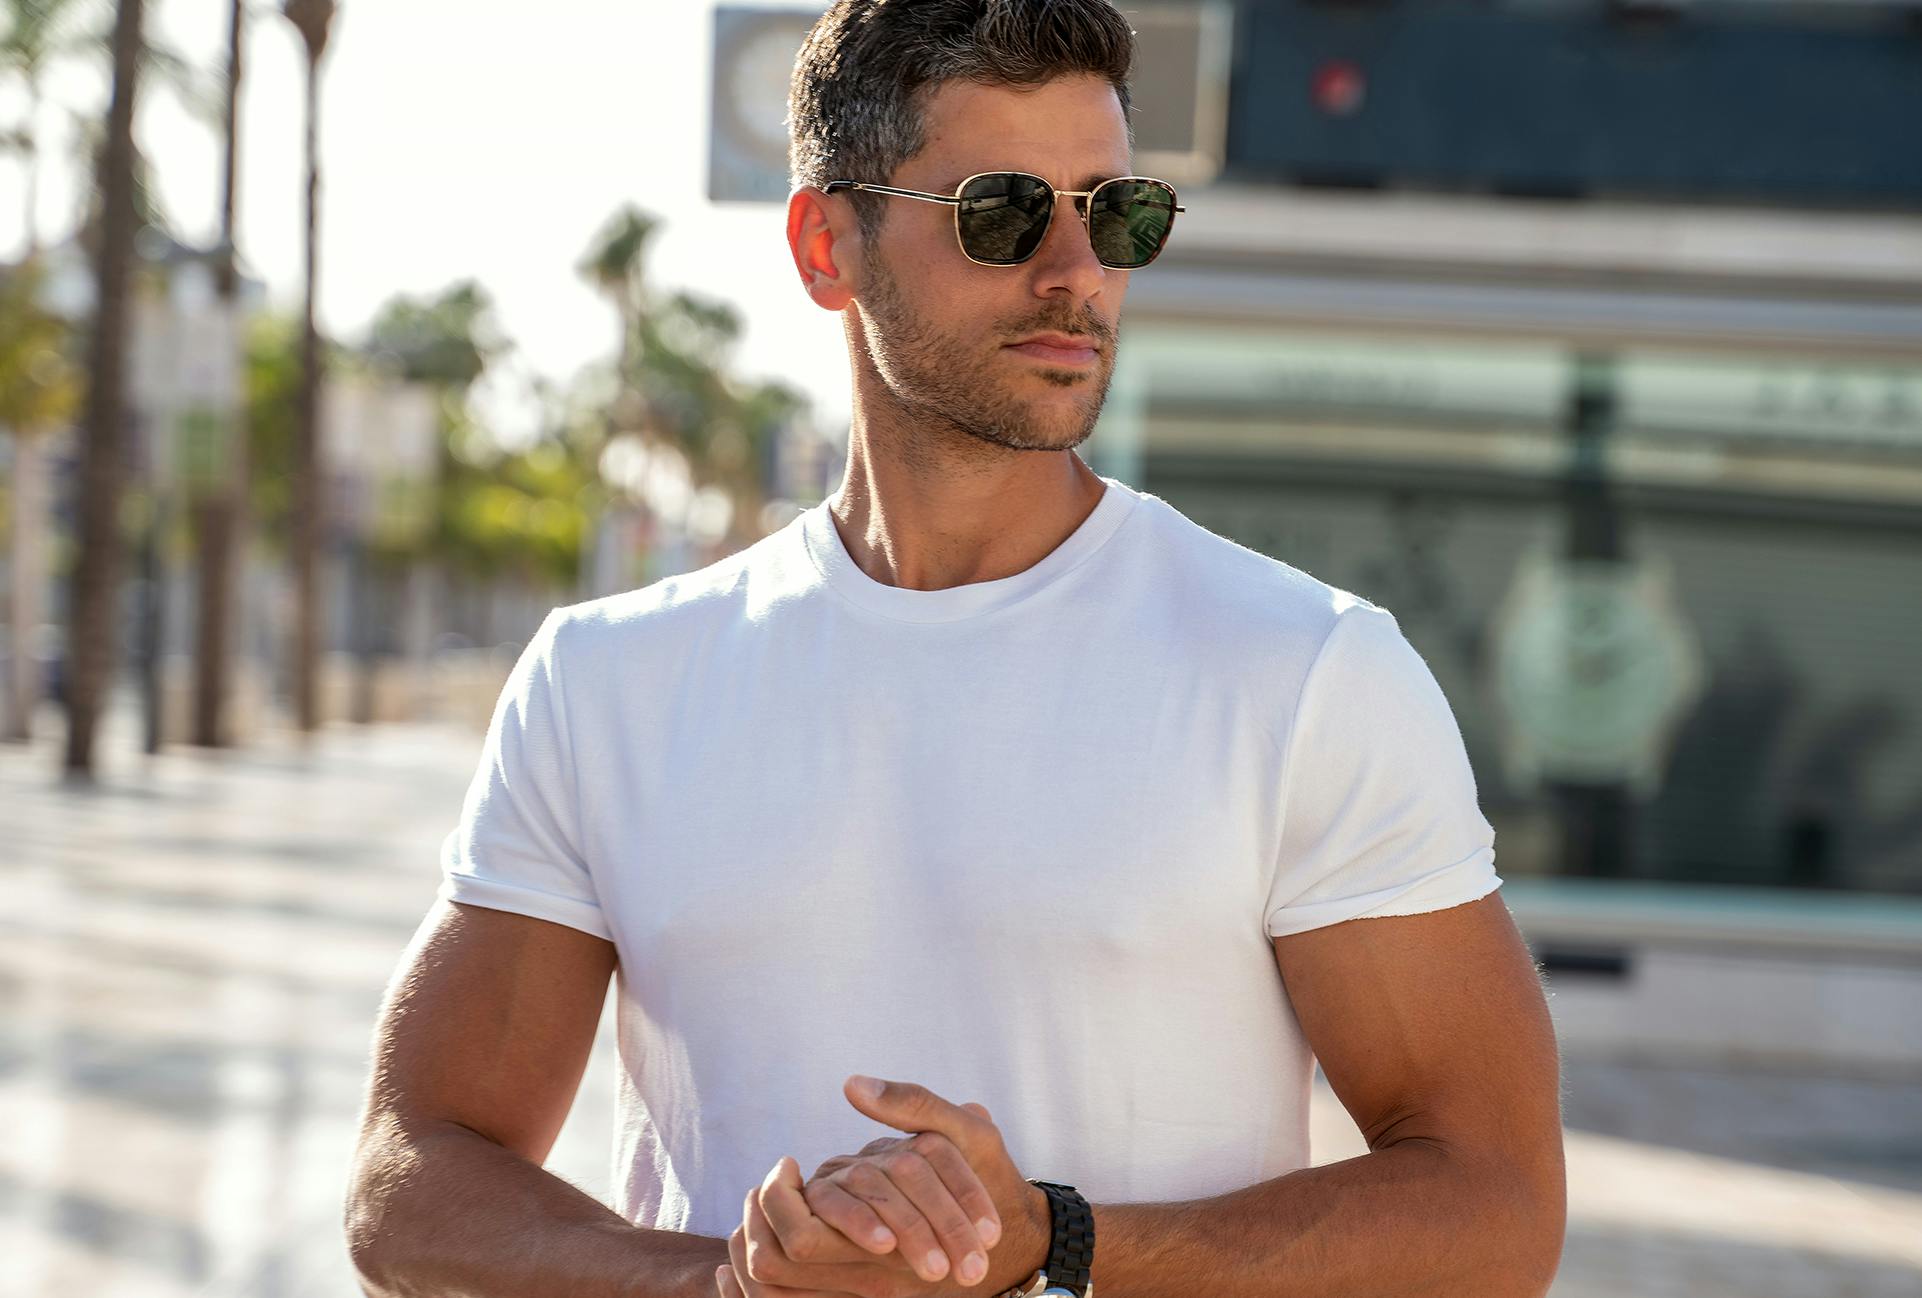 Man wearing a white shirt and sunglasses